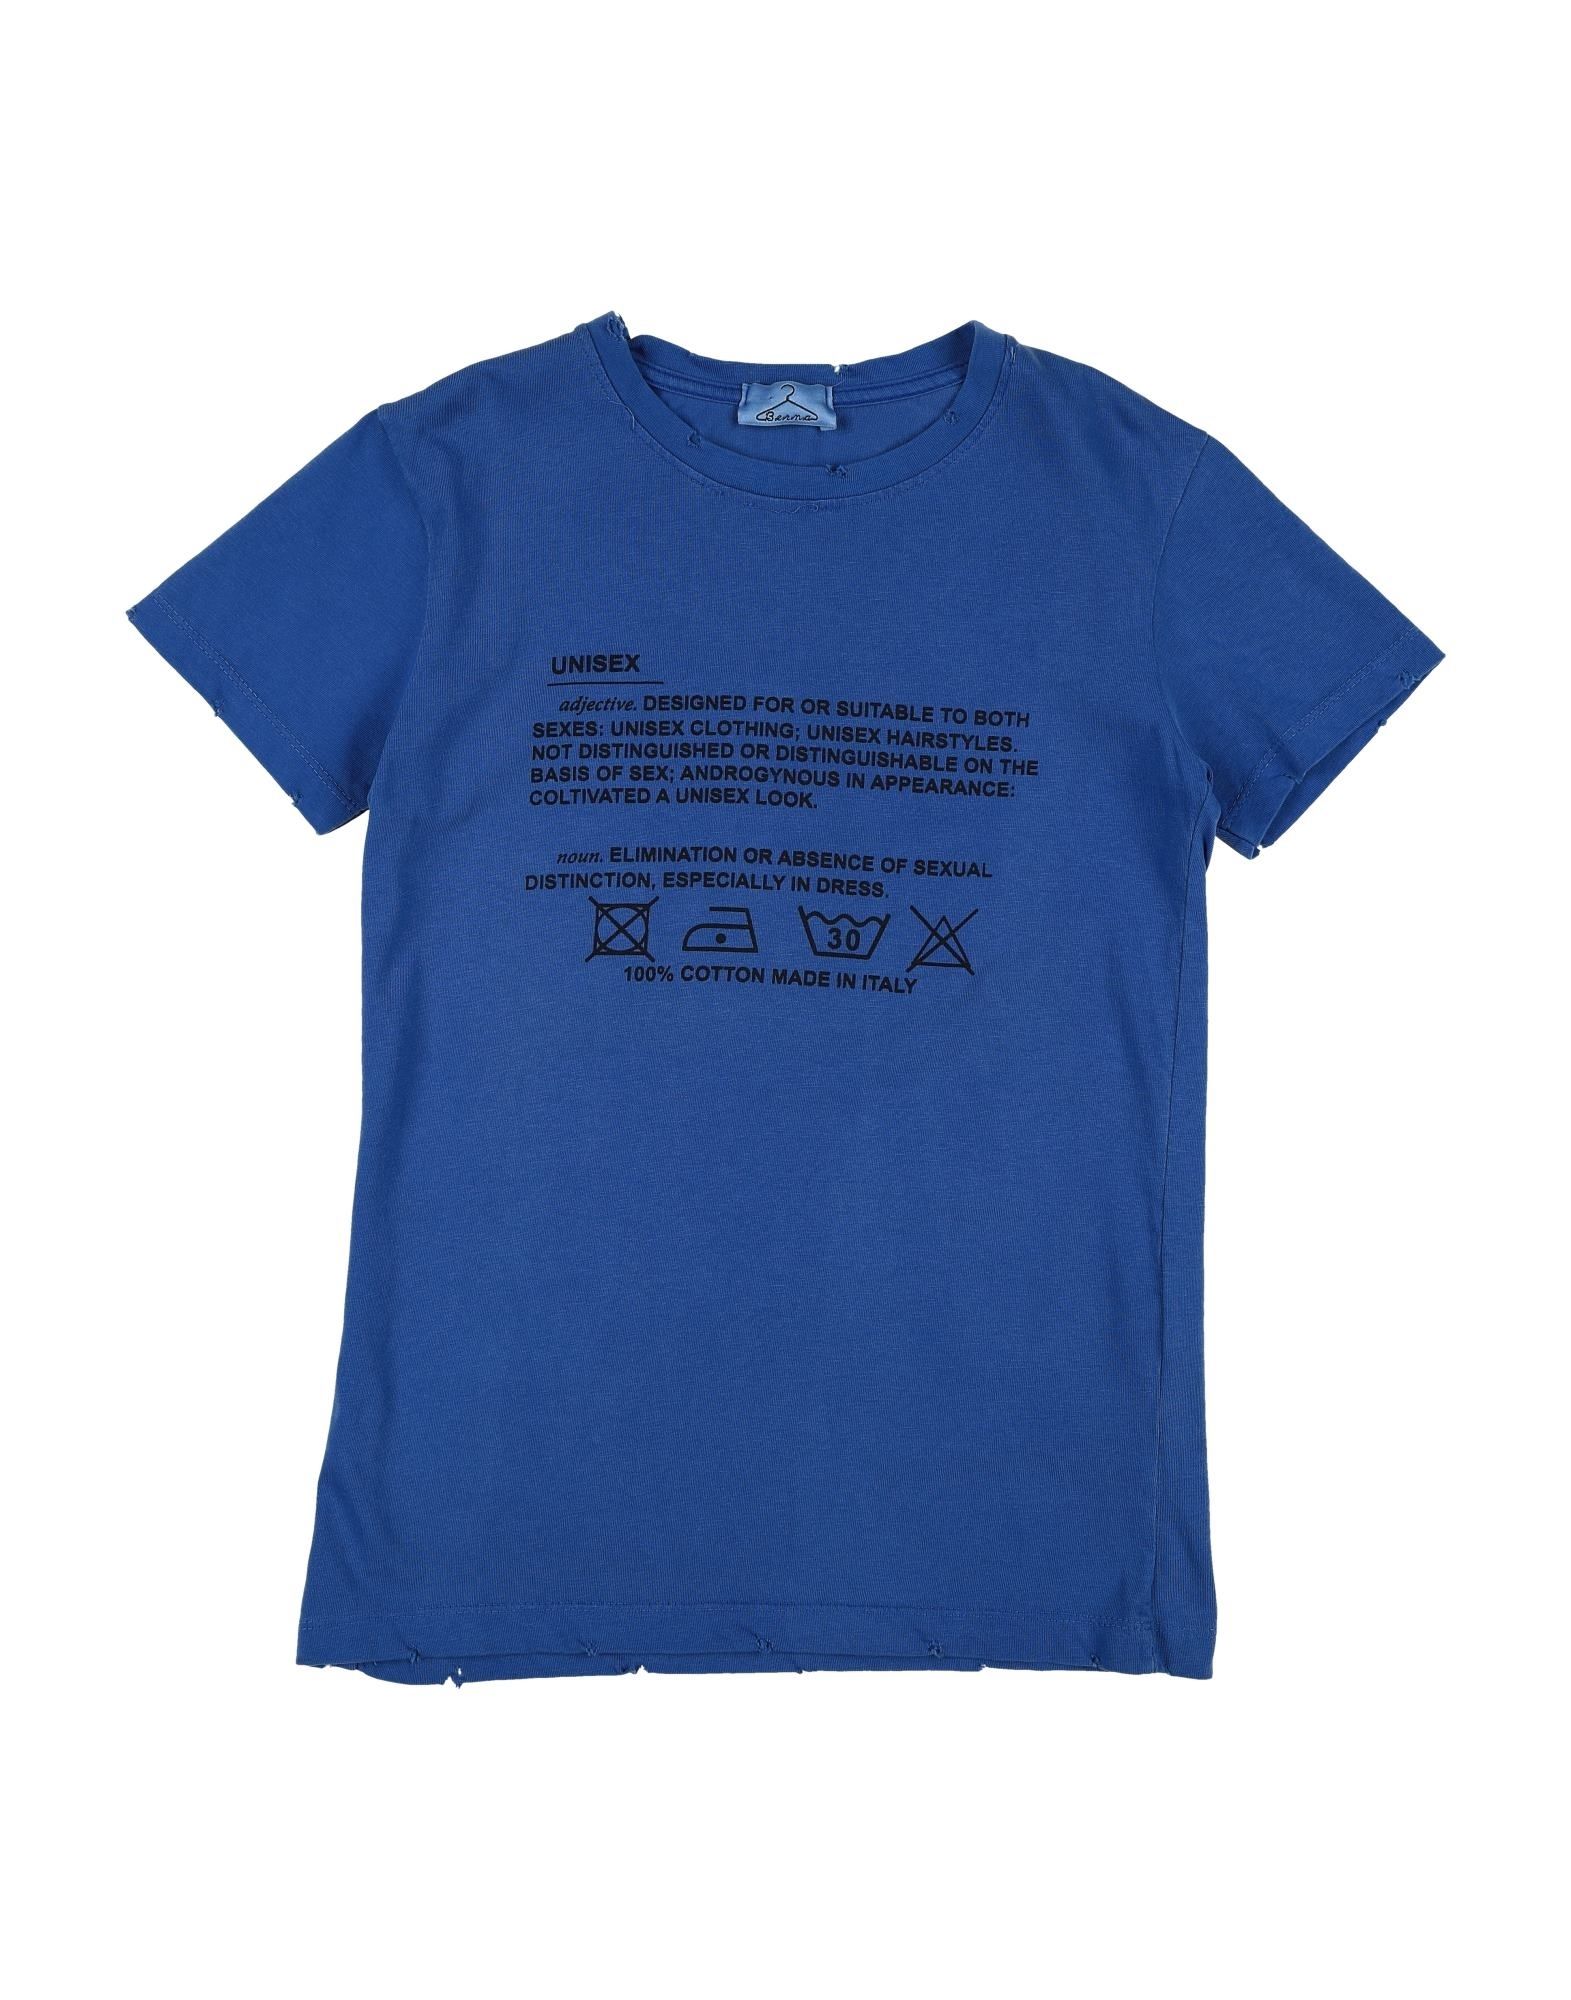 Berna Kids' T-shirts In Blue